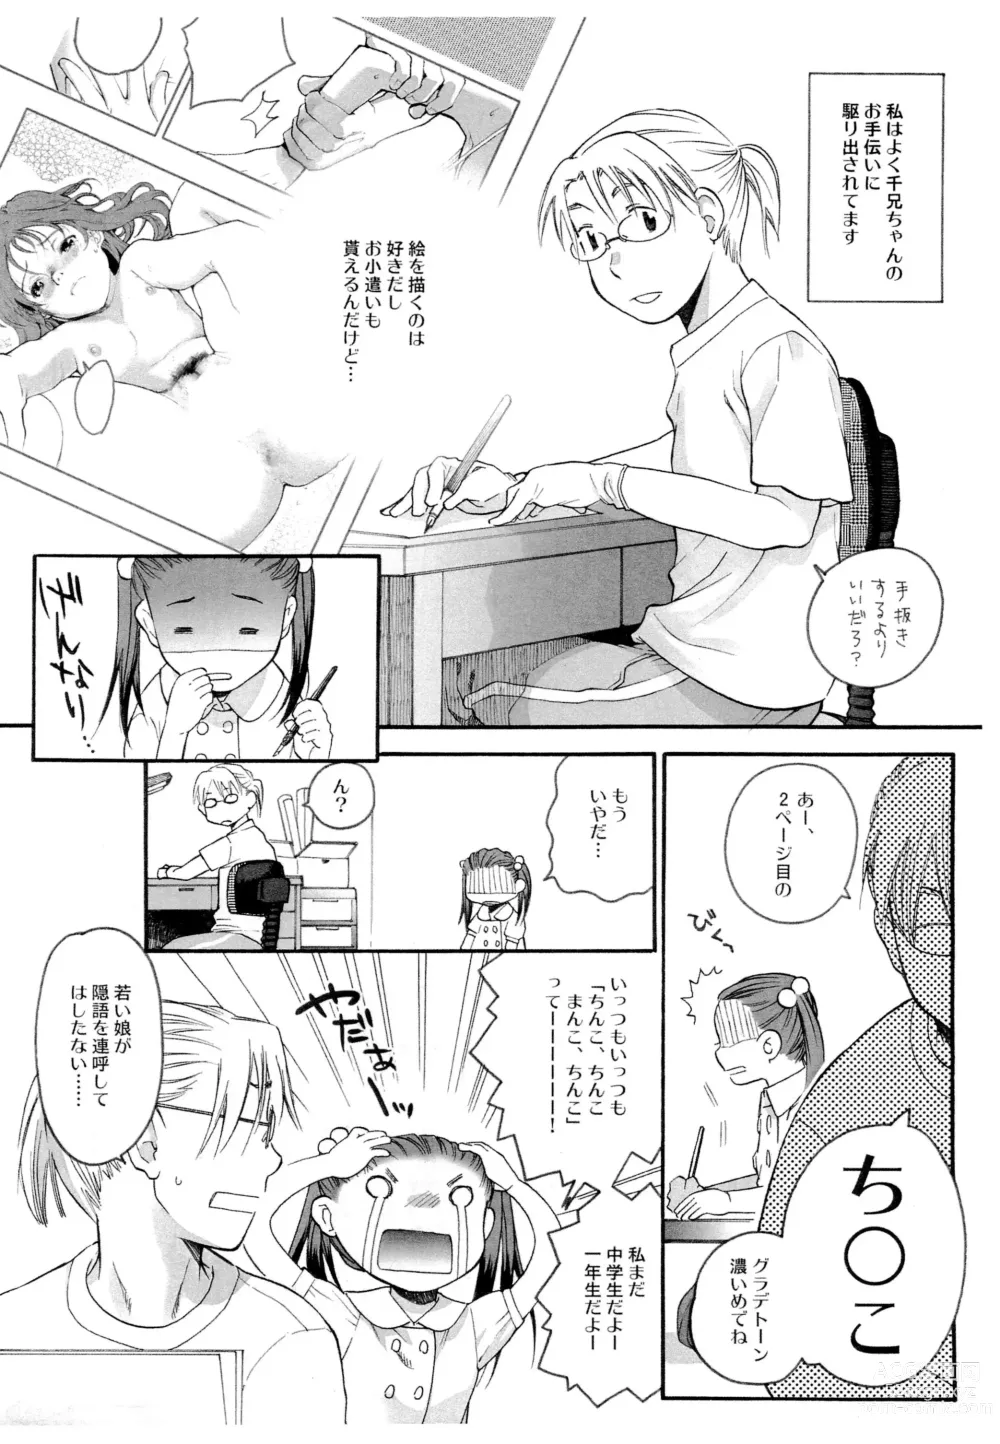 Page 8 of doujinshi Komi Komi